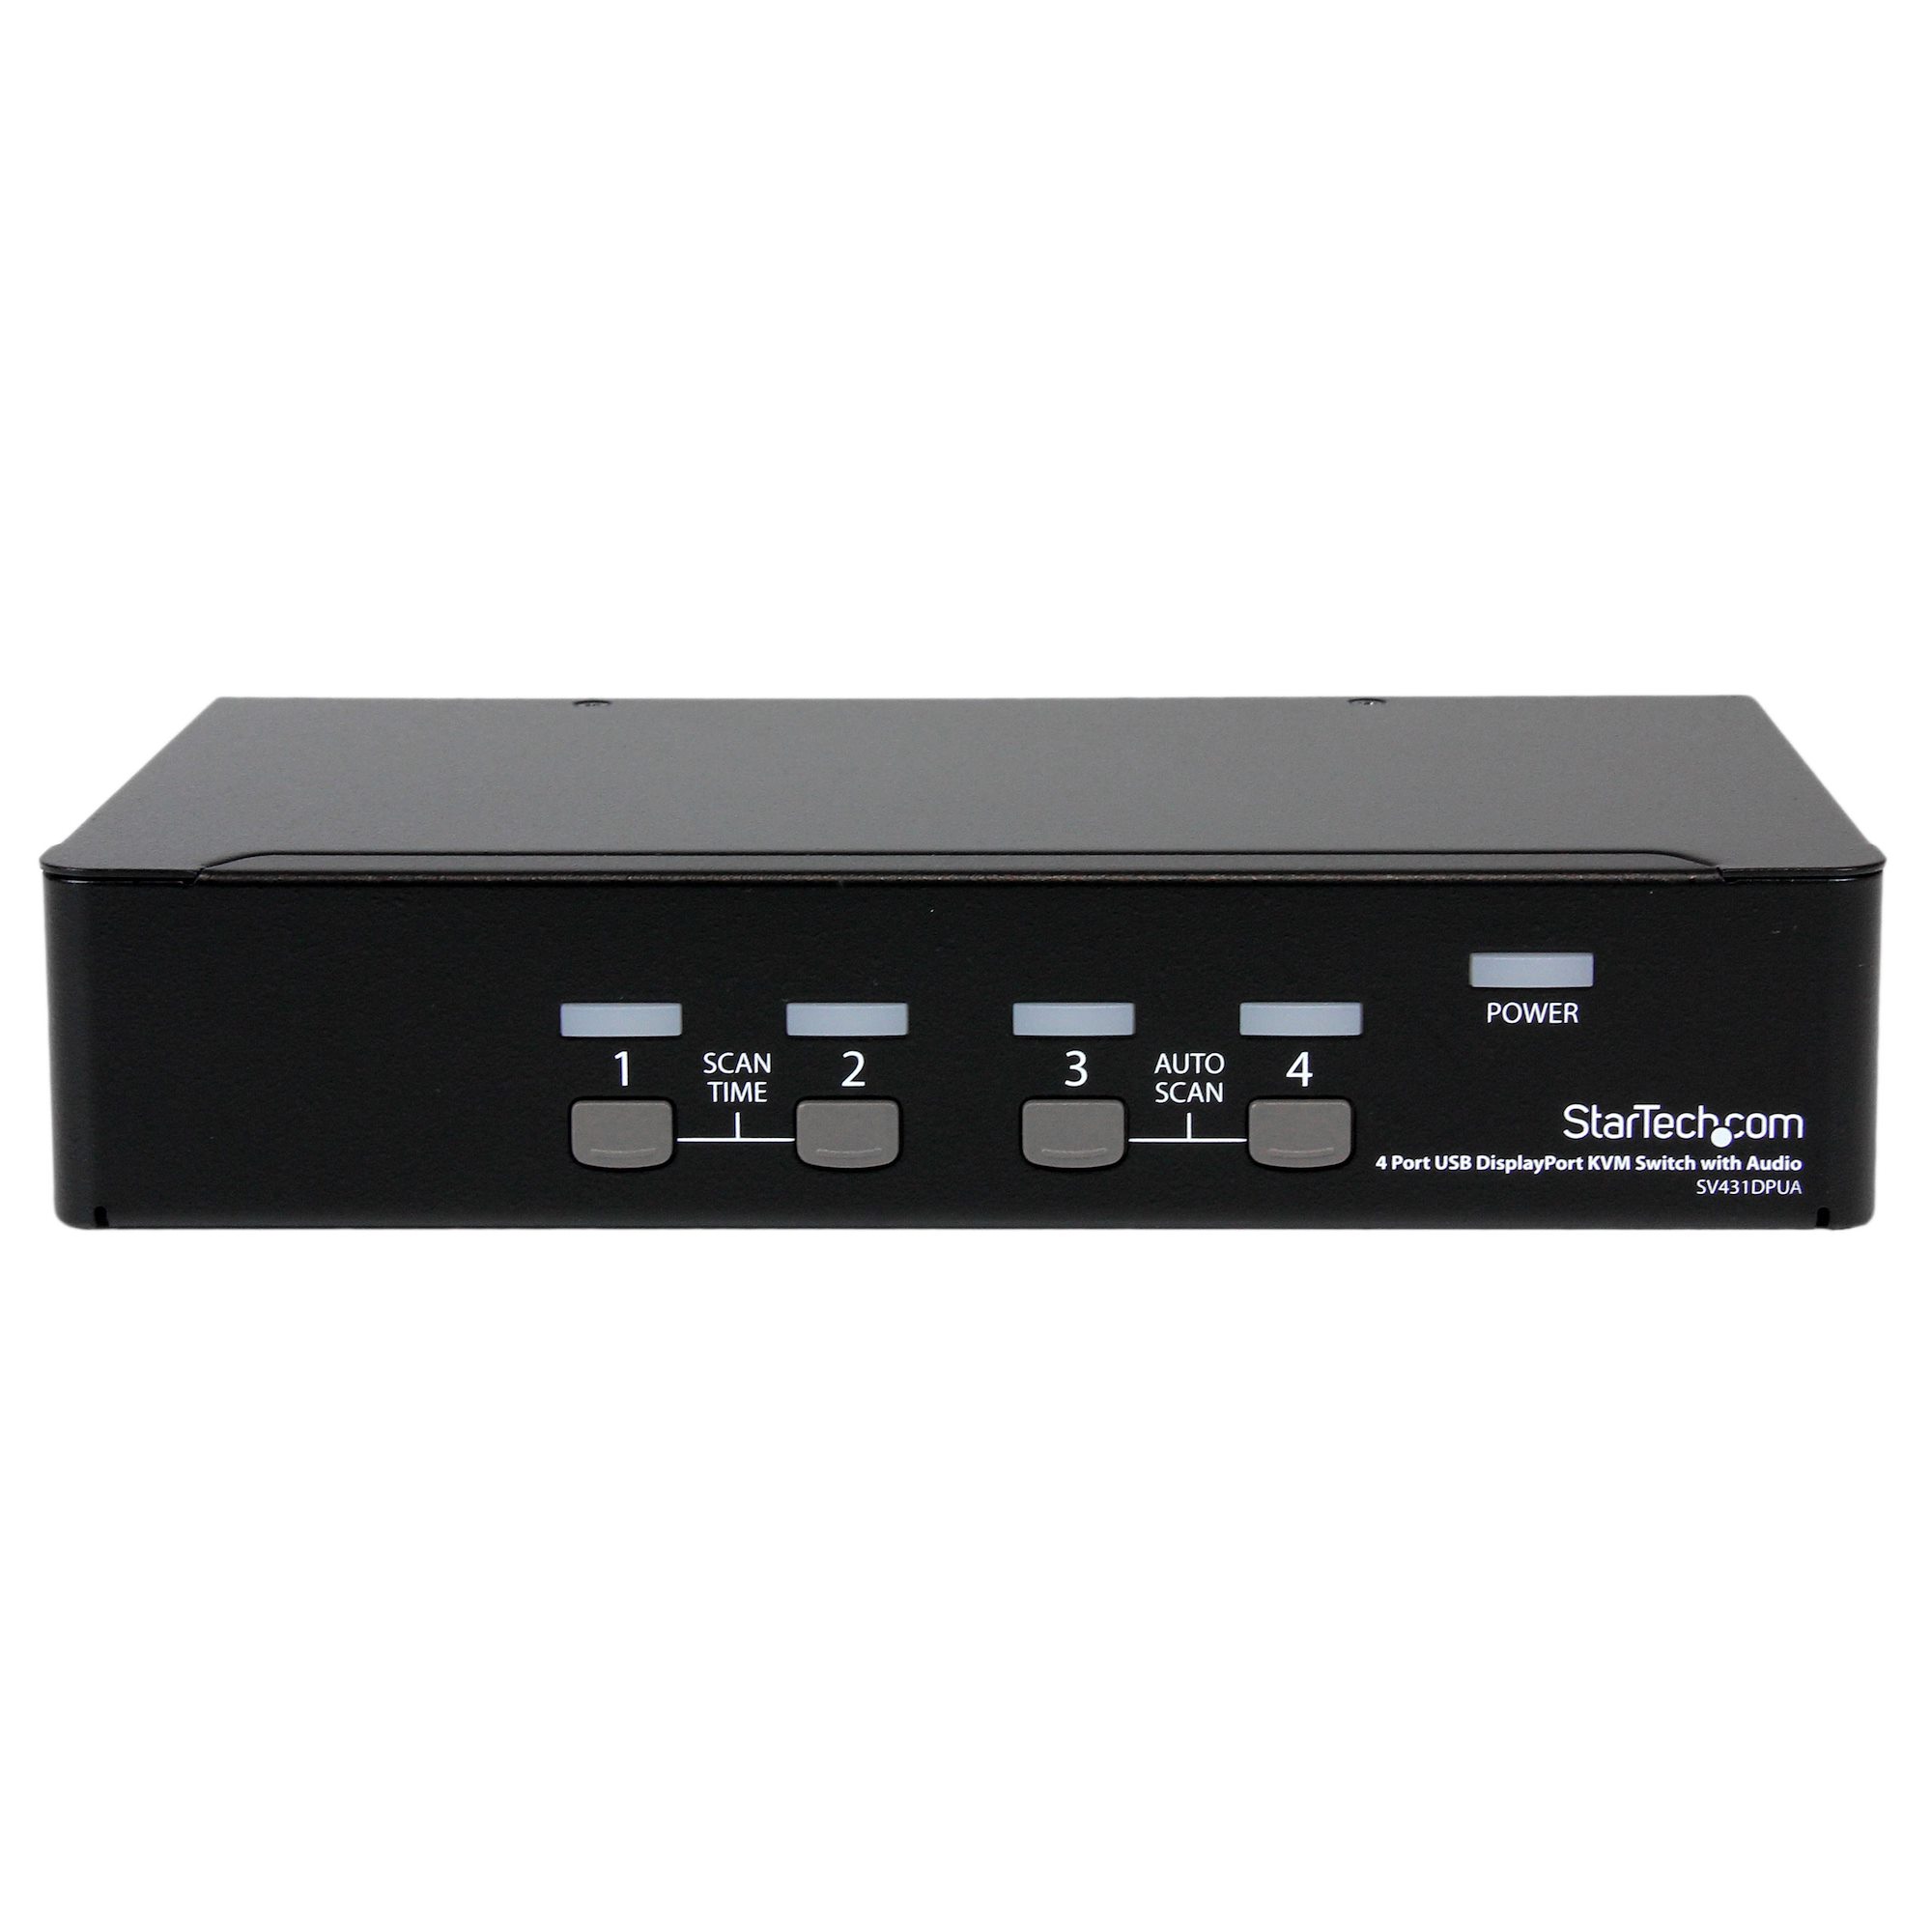 4 StarTech SV431DPUA StarTech.com 4 Port USB DisplayPort KVM Switch with Audio 